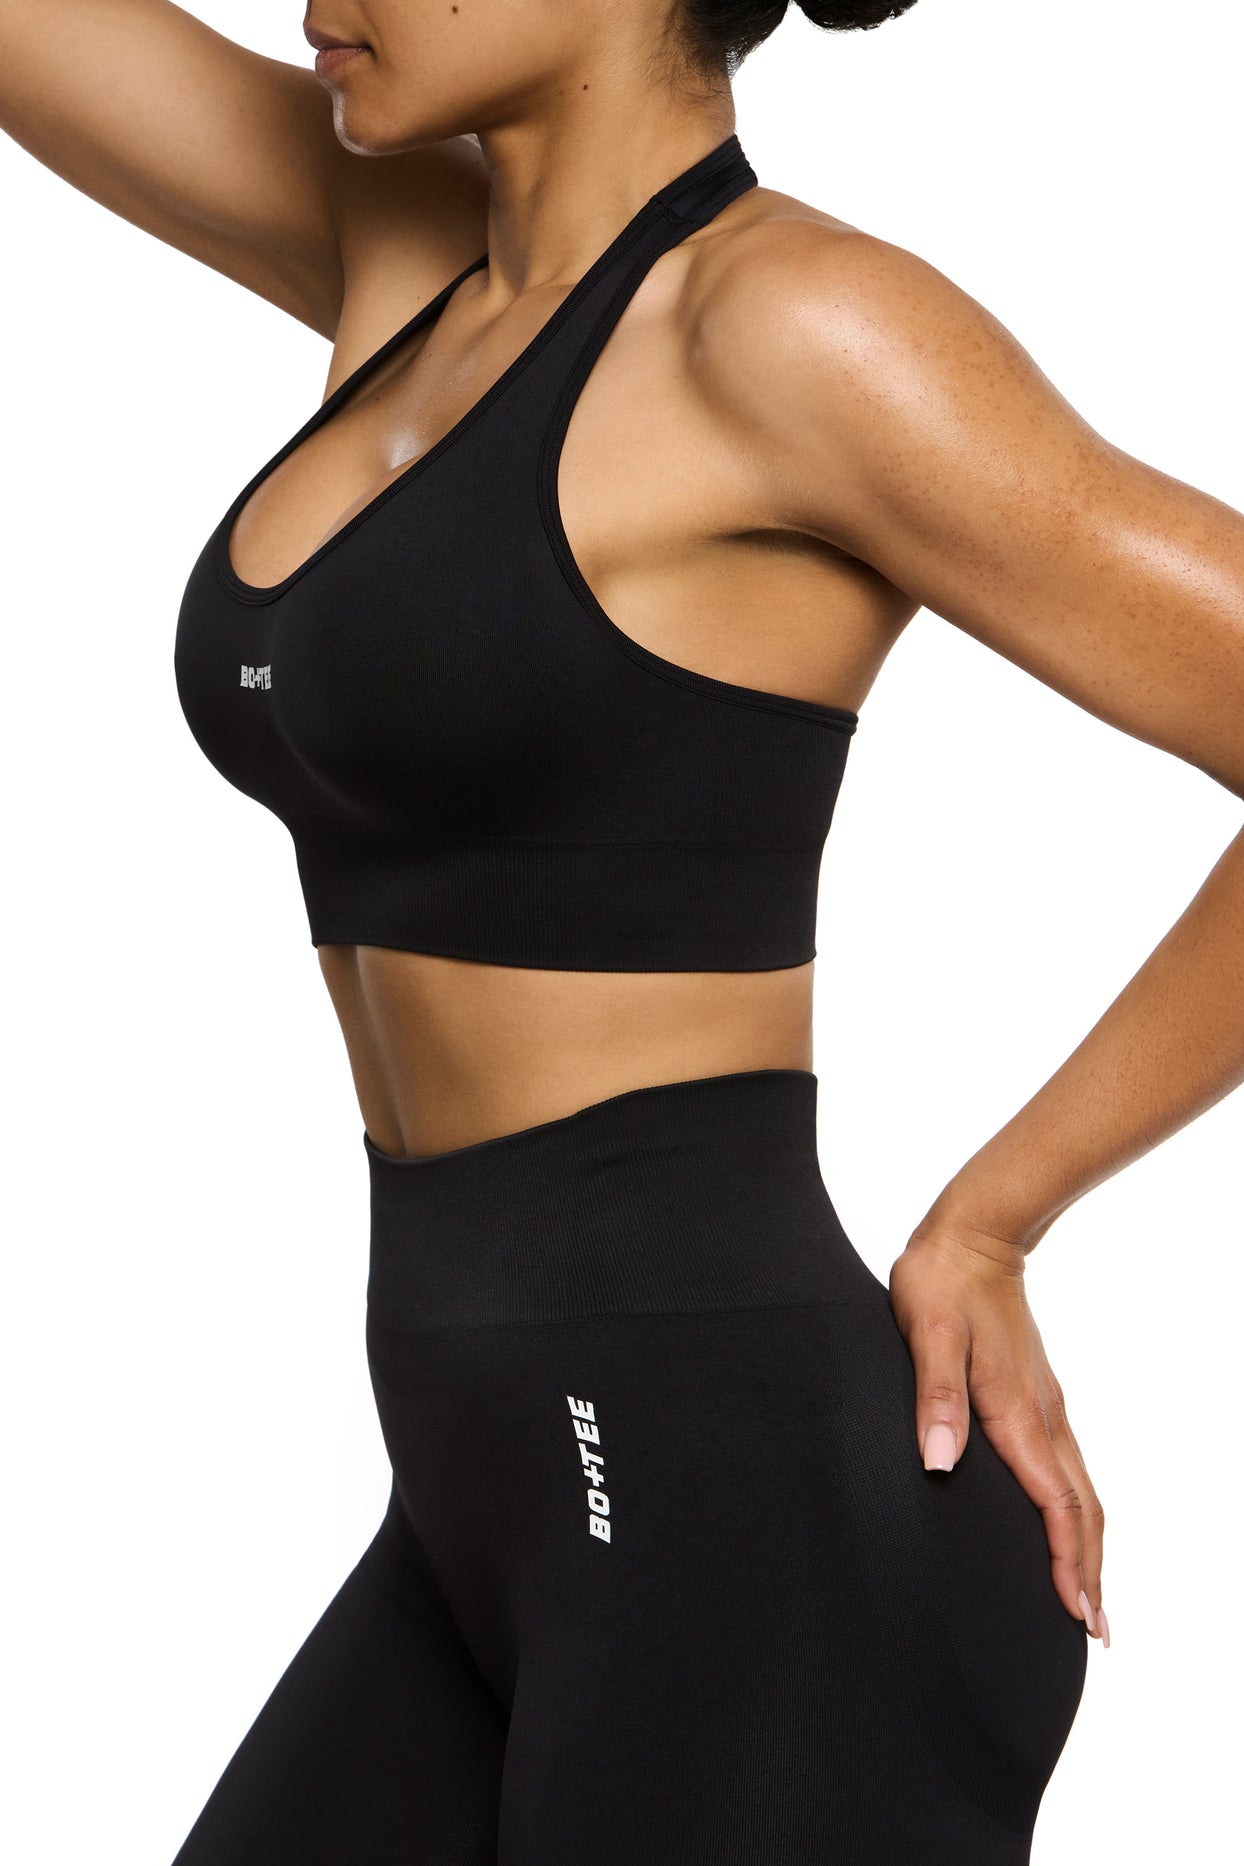 Backless Halter Yoga Sports Bra (Black), Women's Fashion